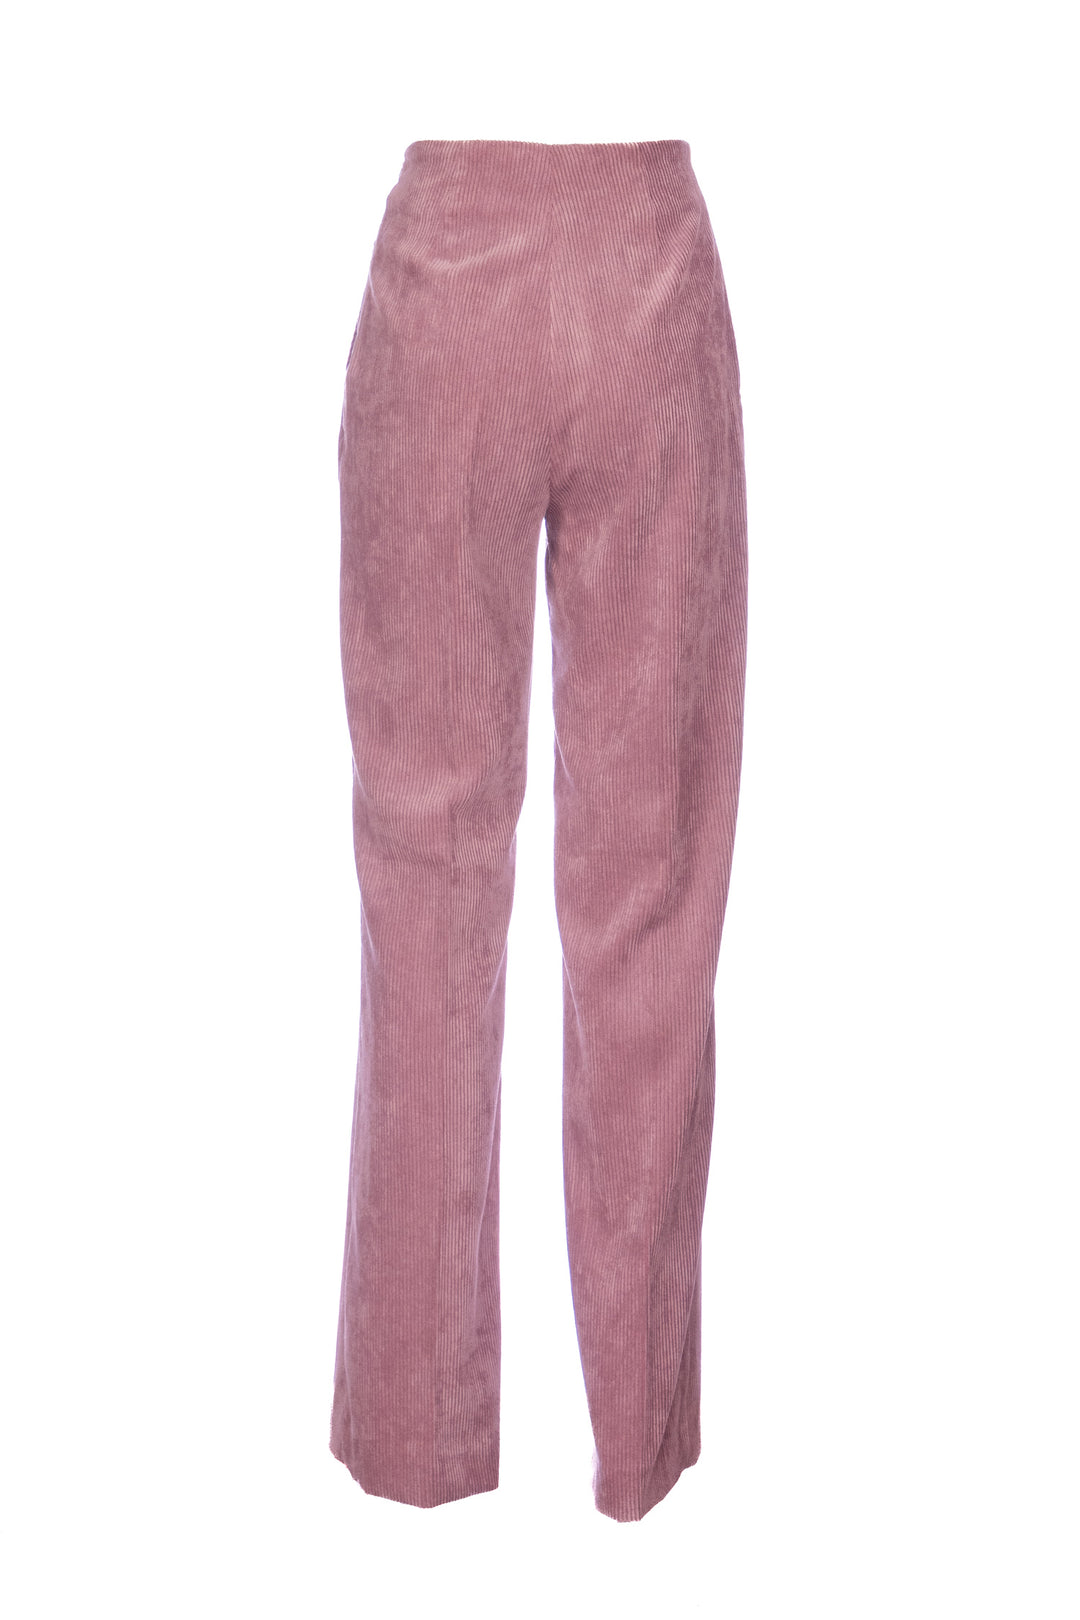 NENETTE Pantalone a gamba larga “EREMO” rosa in velluto - Mancinelli 1954